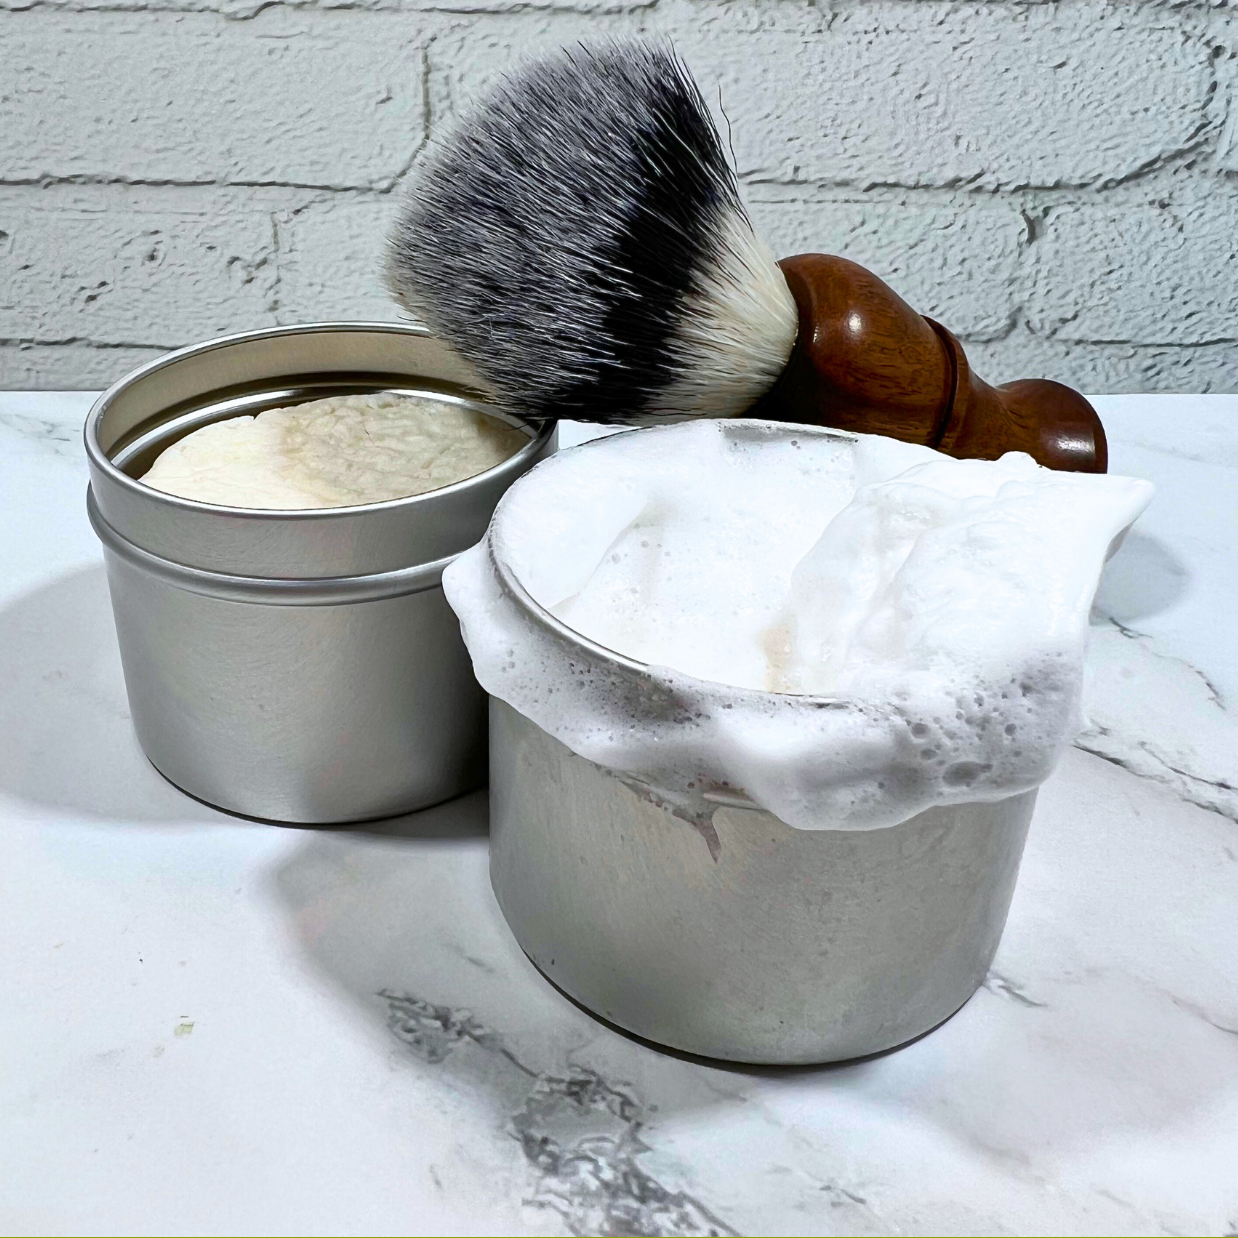 Eucalyptus/Lemon Solid Shave Soap for Zero Waste Shaving Experience.